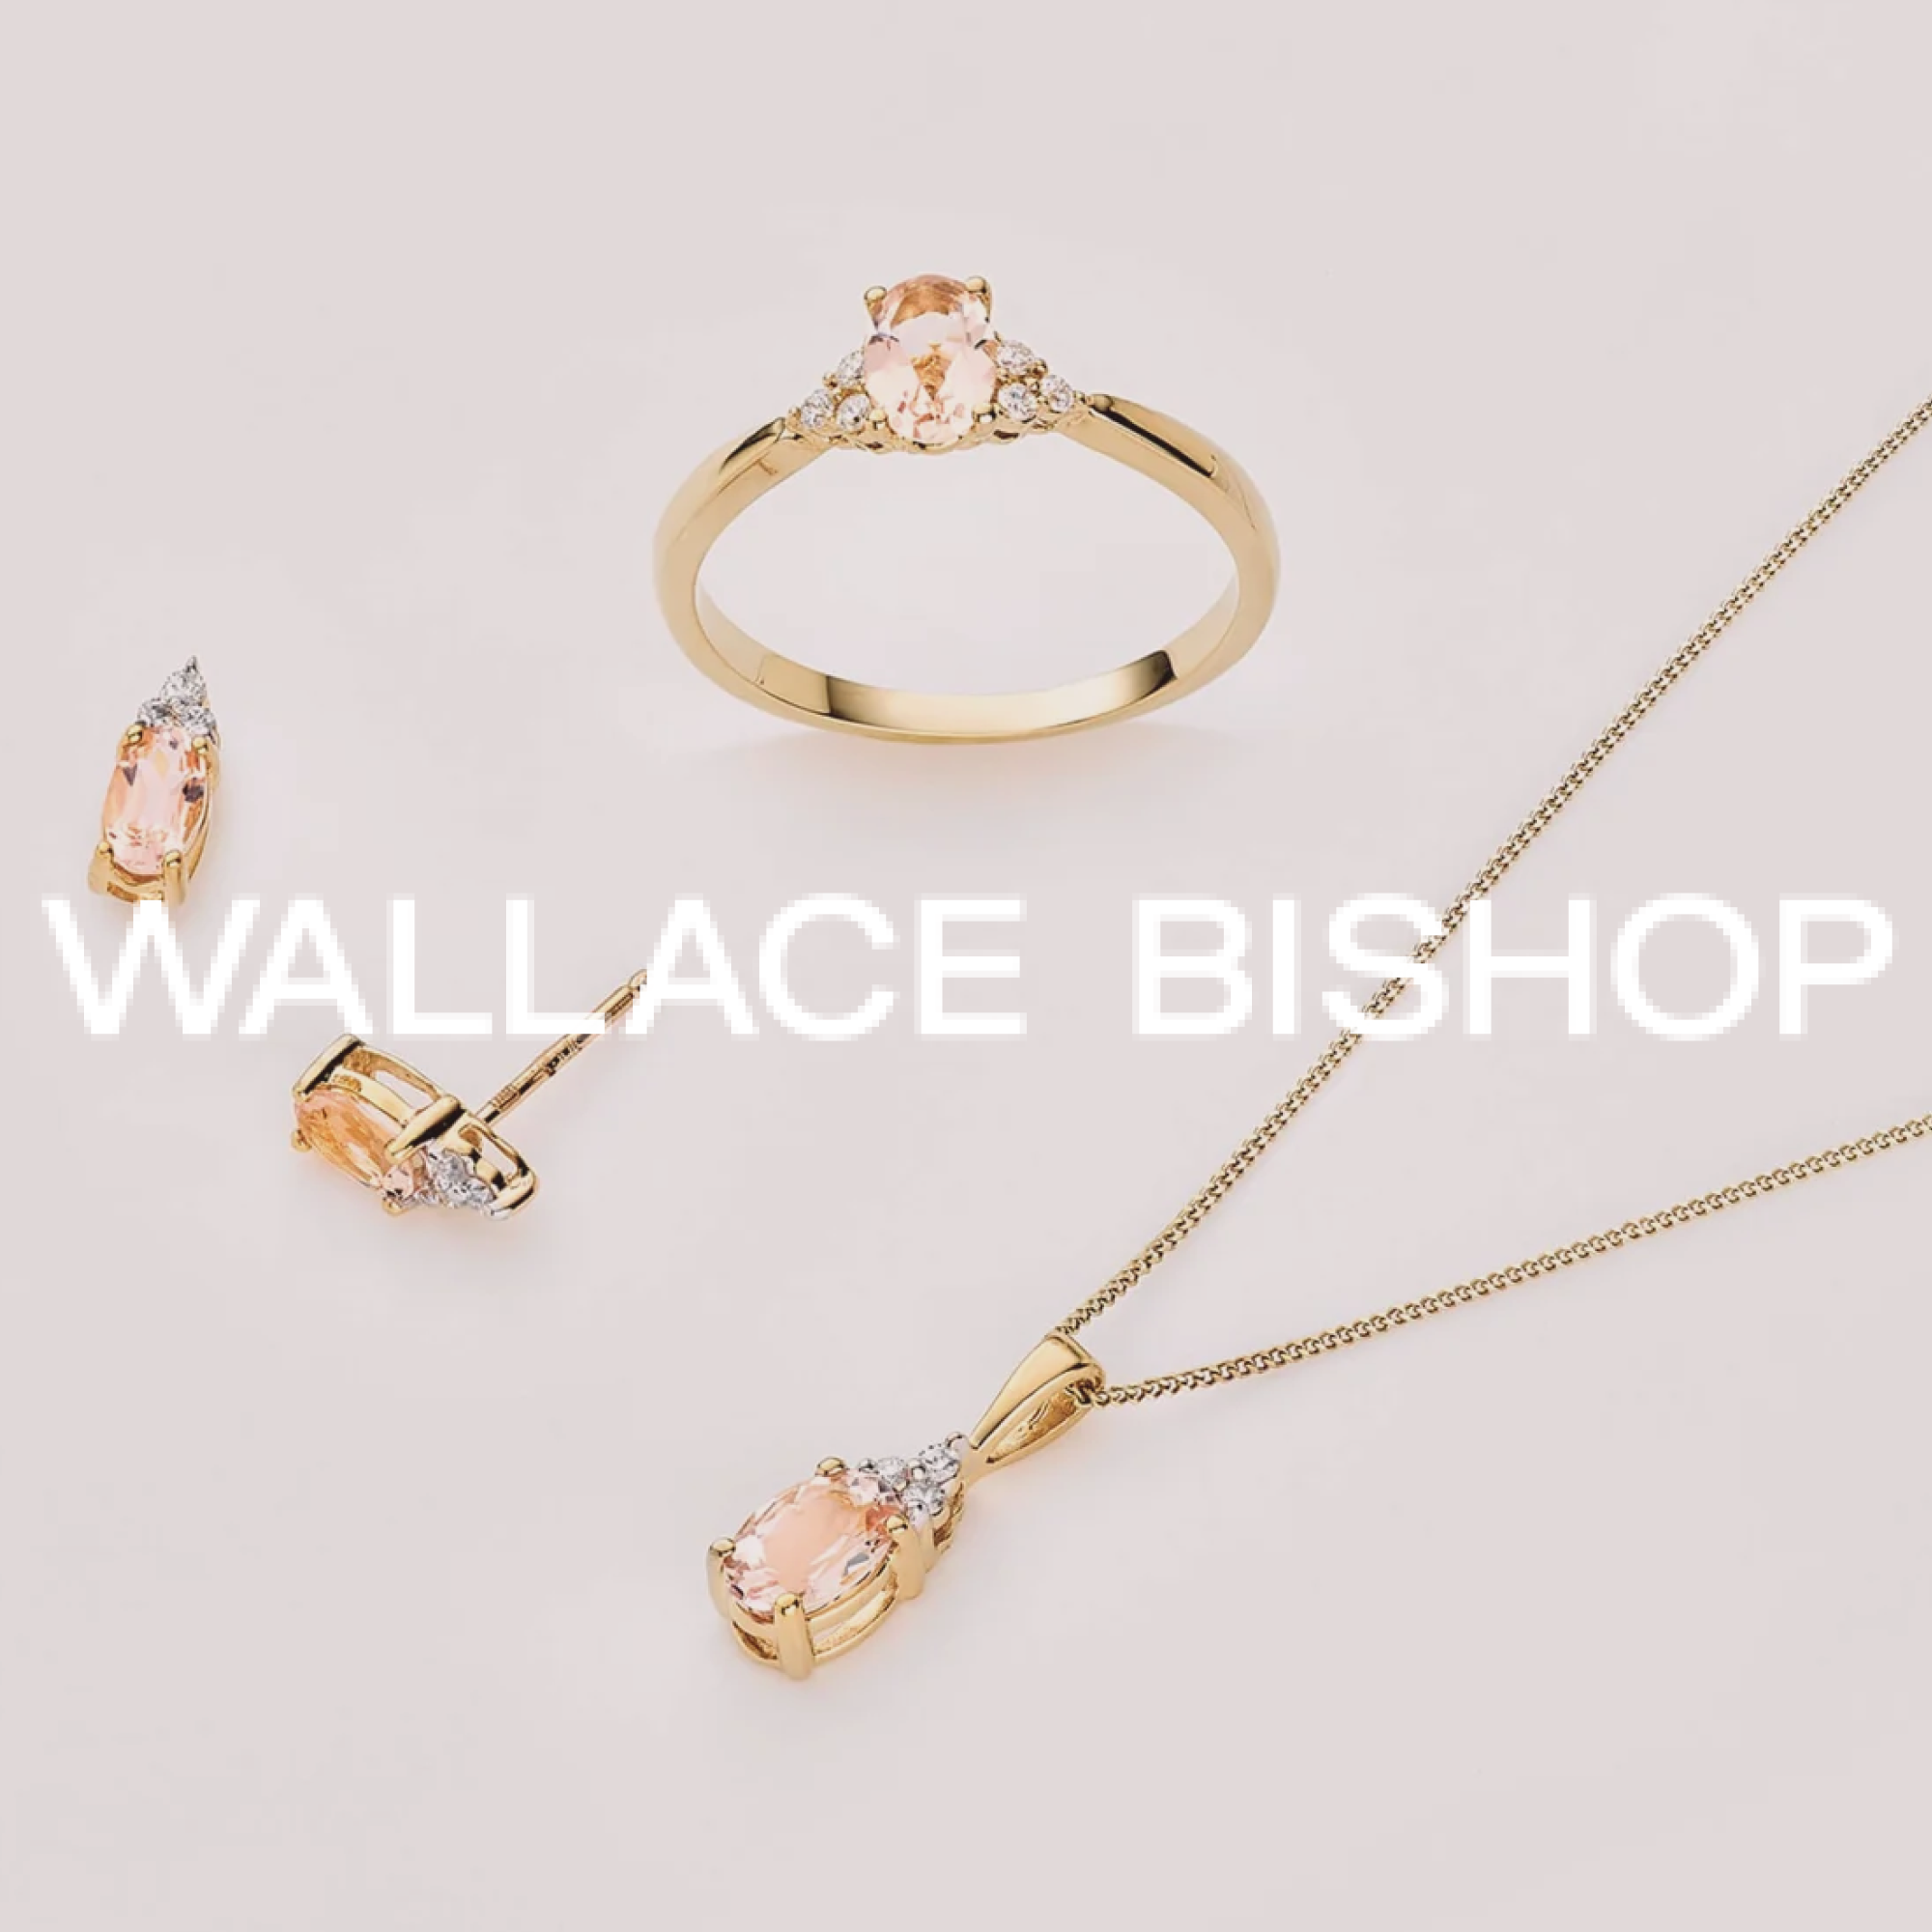 Wallace Bishop